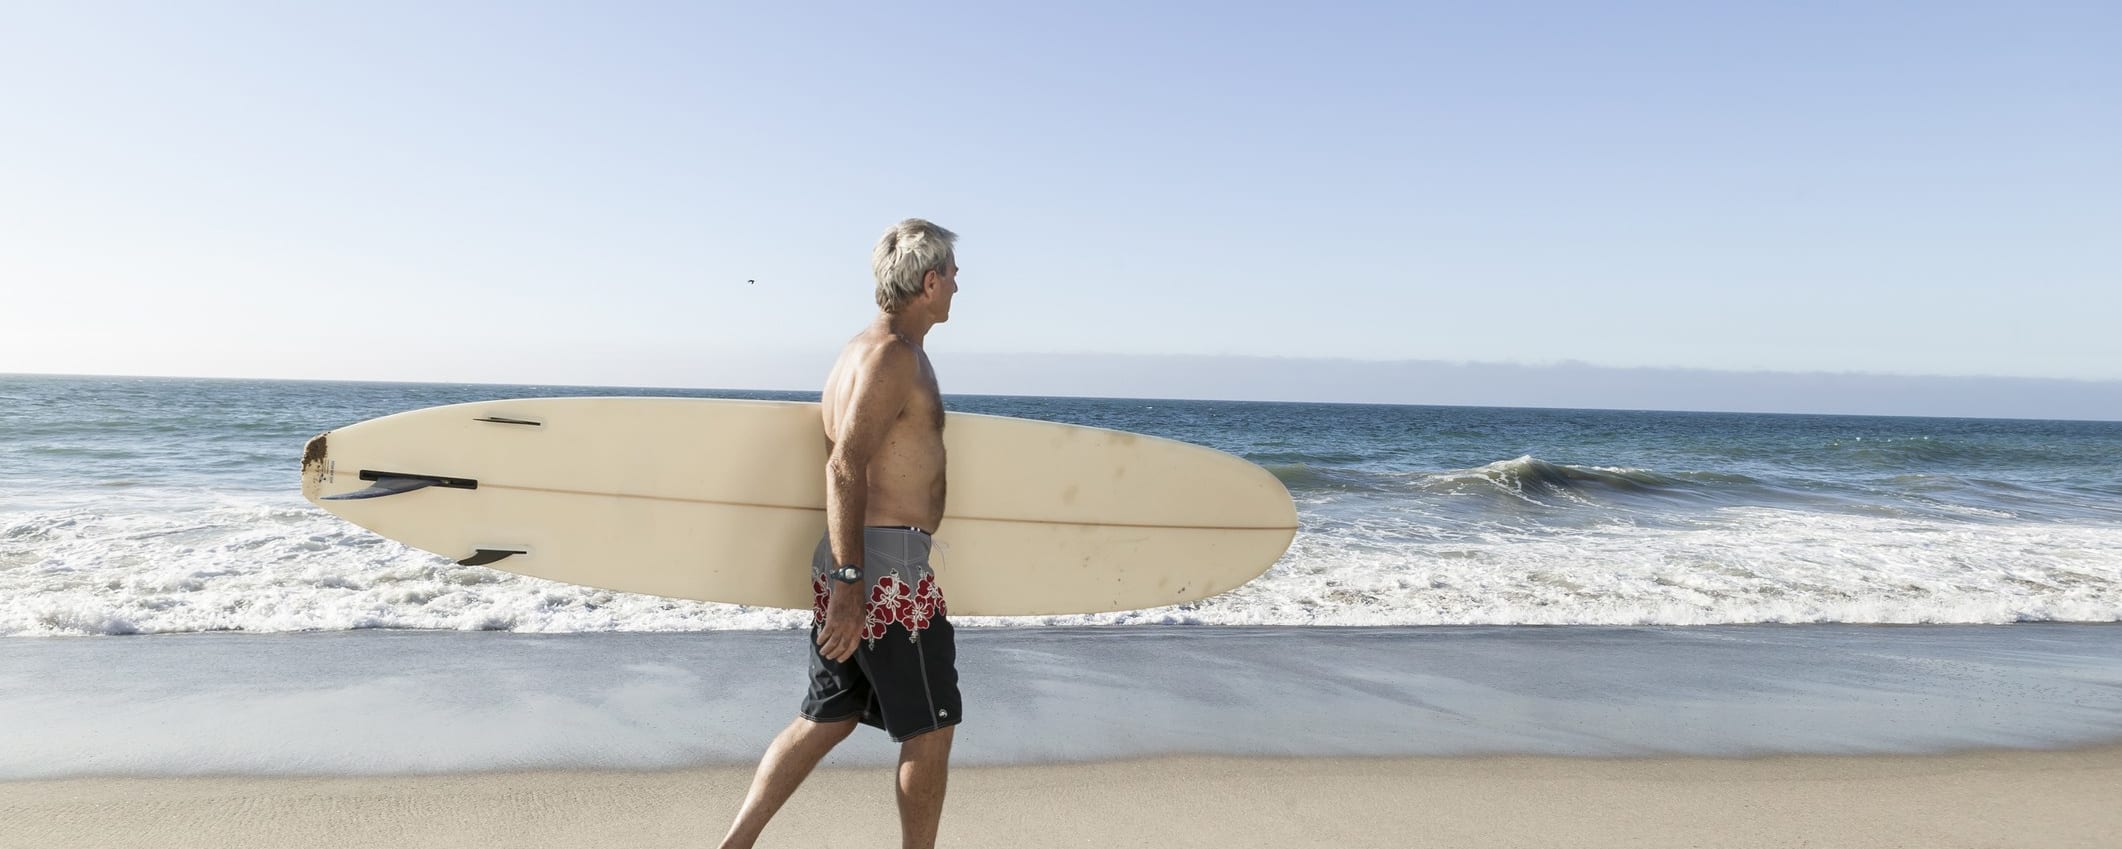 A man with gray hair walks along a beach carrying a surf board